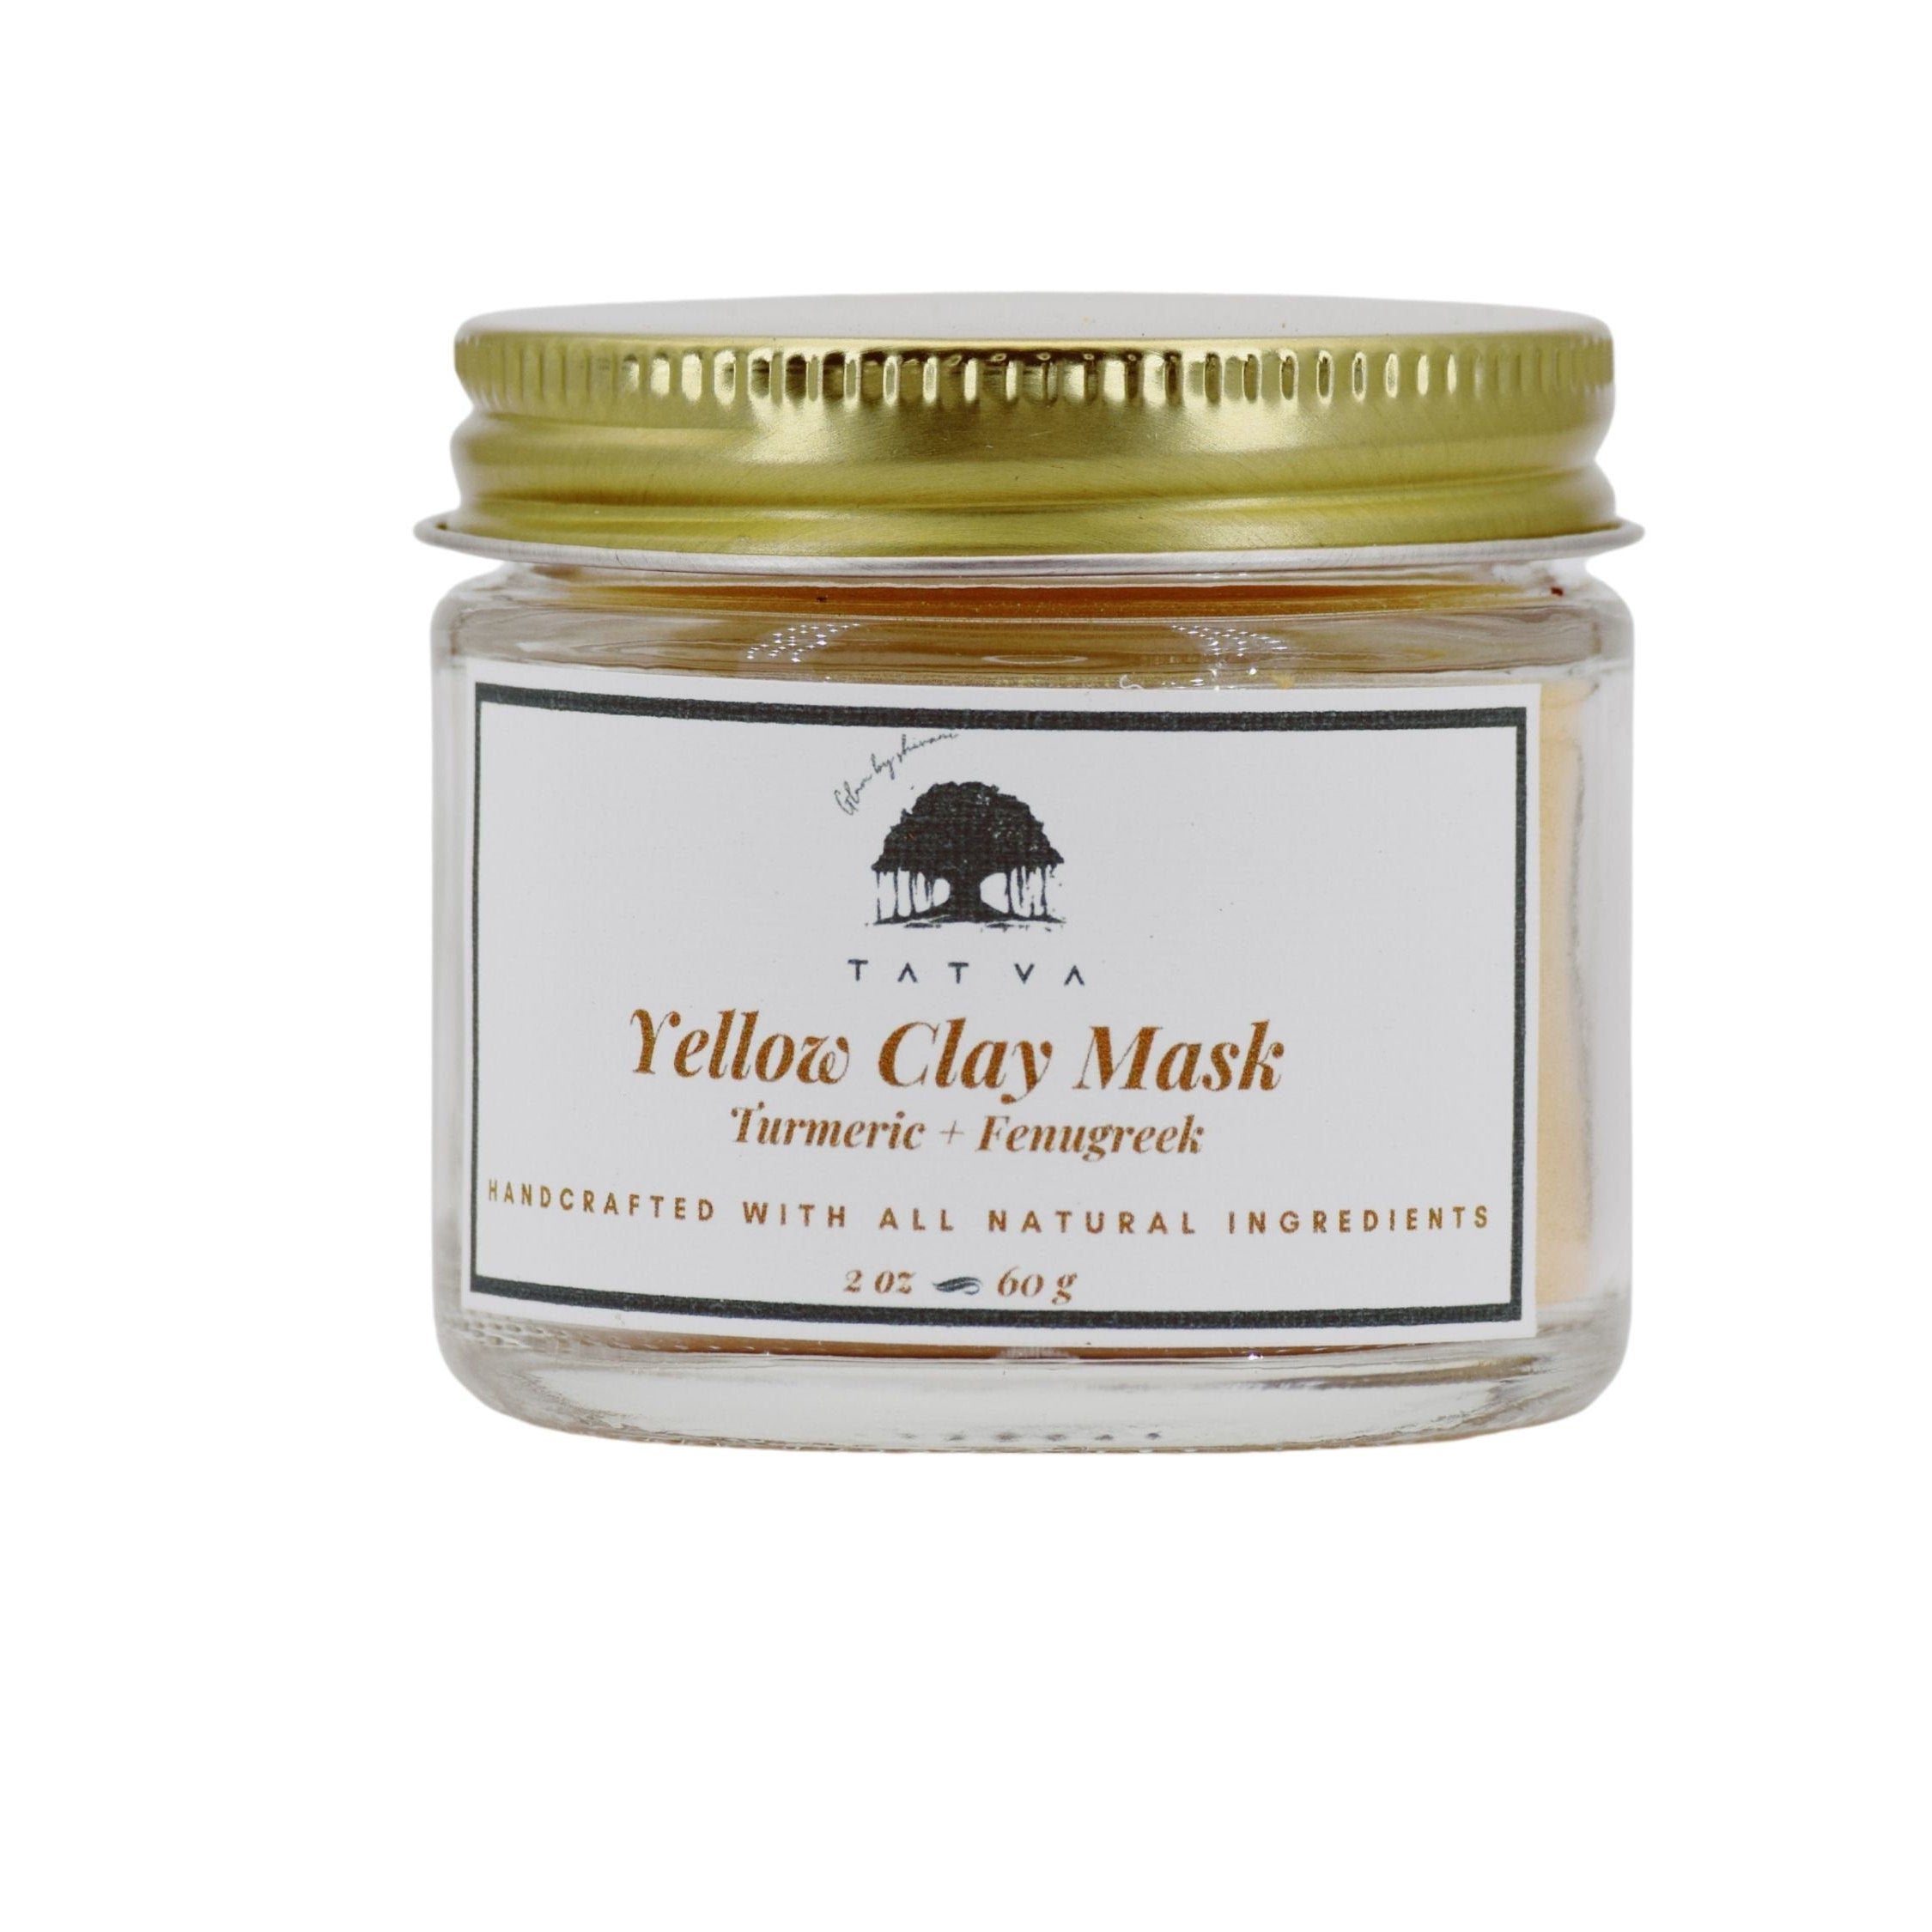 The Yellow Clay Mask - Brightening, Detoxifying